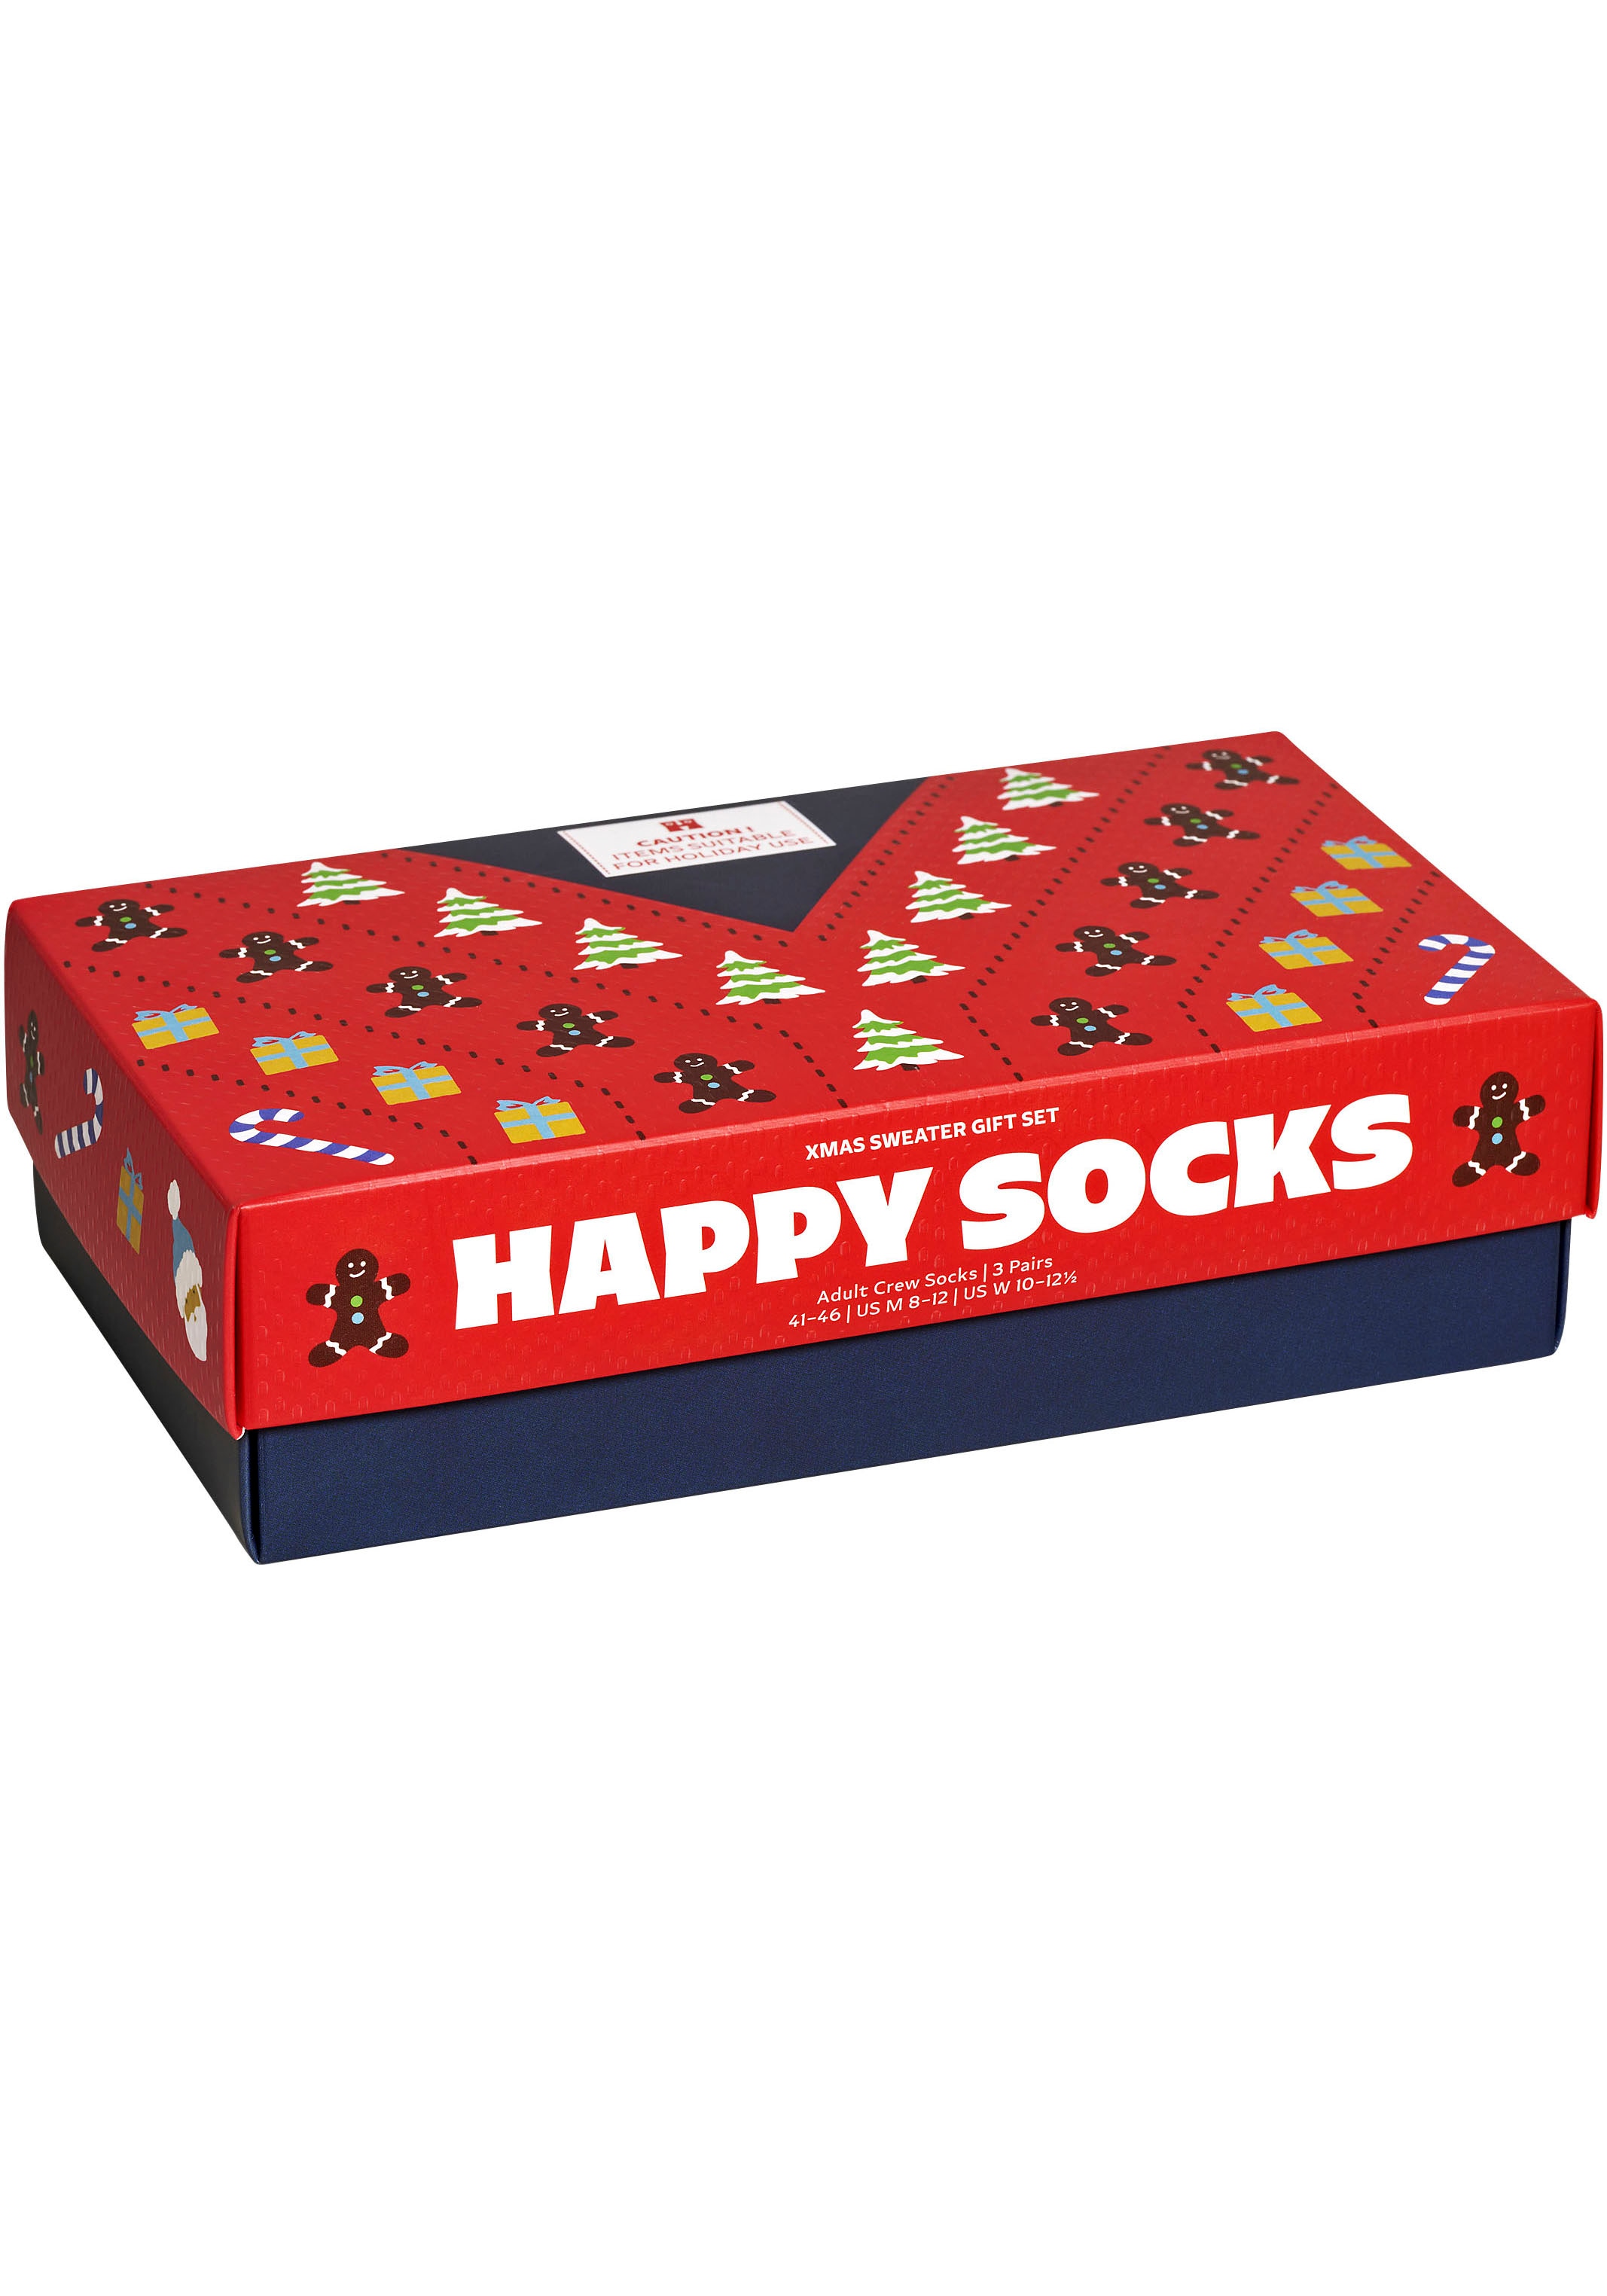 Happy Socks Socken, XMAS Sweater Gift Set